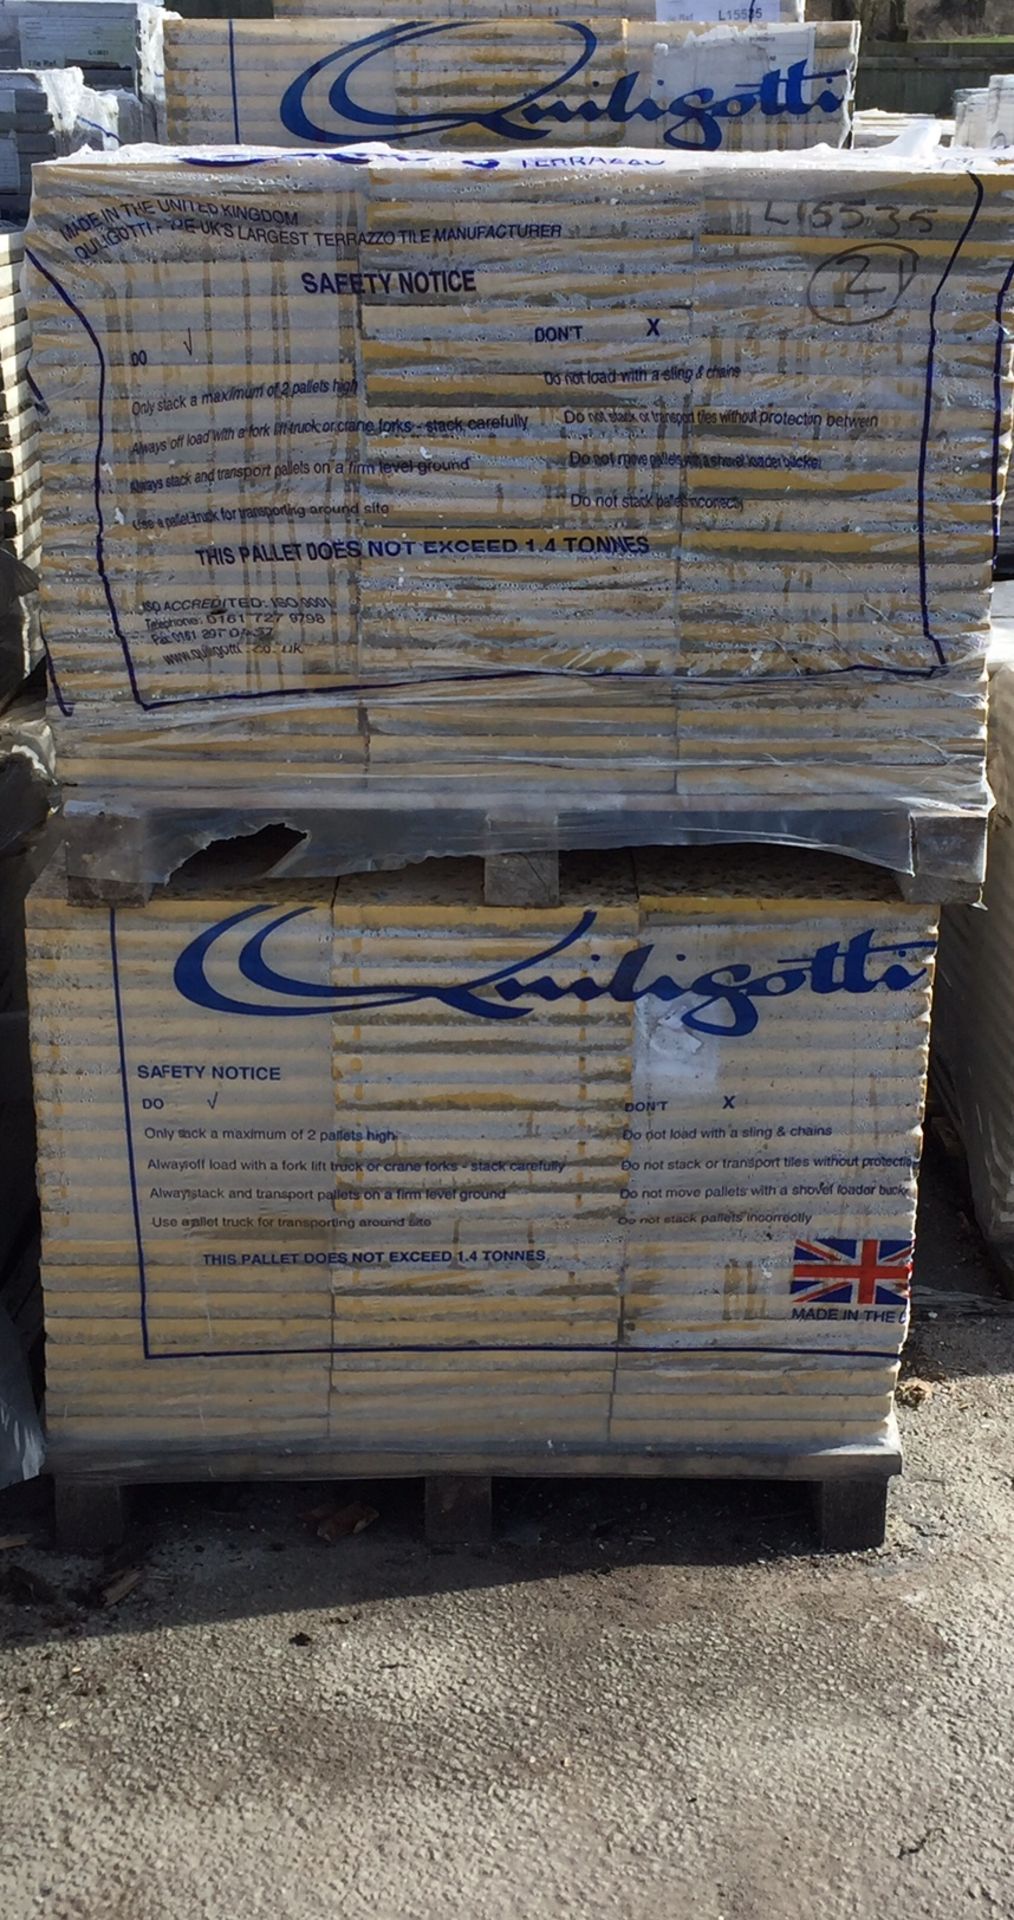 1 x Pallet (20 sq yards) of Brand New Quiligotti Terrazzo Commercial Floor Tiles (ref L15535)